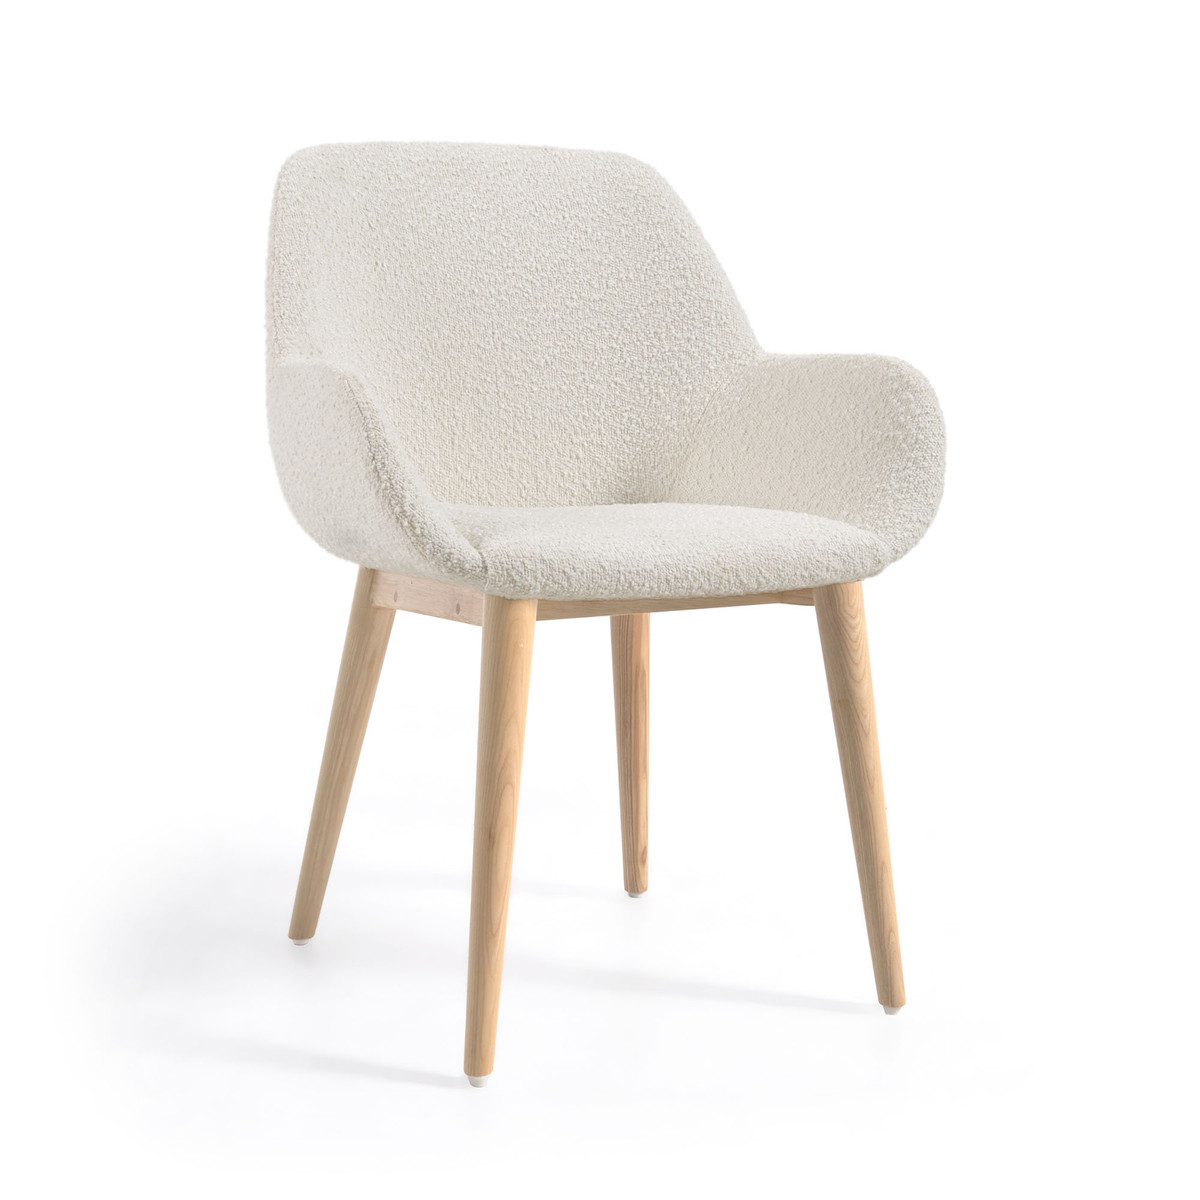 CC5212J33 0 - Konna Boucle Dining Chair - White/Natural Frame